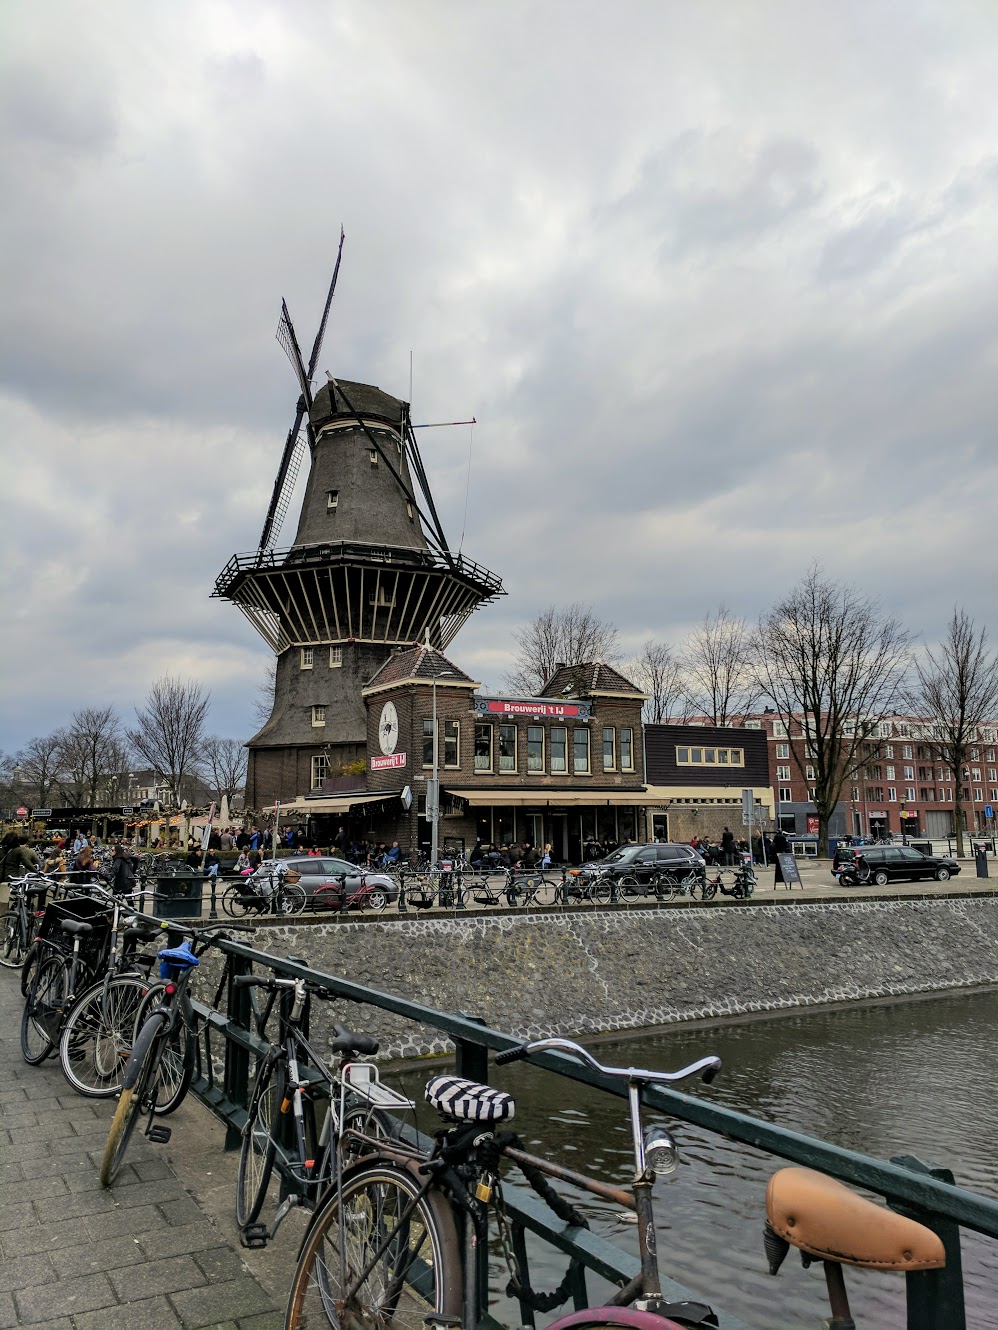 IMG 20180331 151702 - Amsterdam Travel Guide